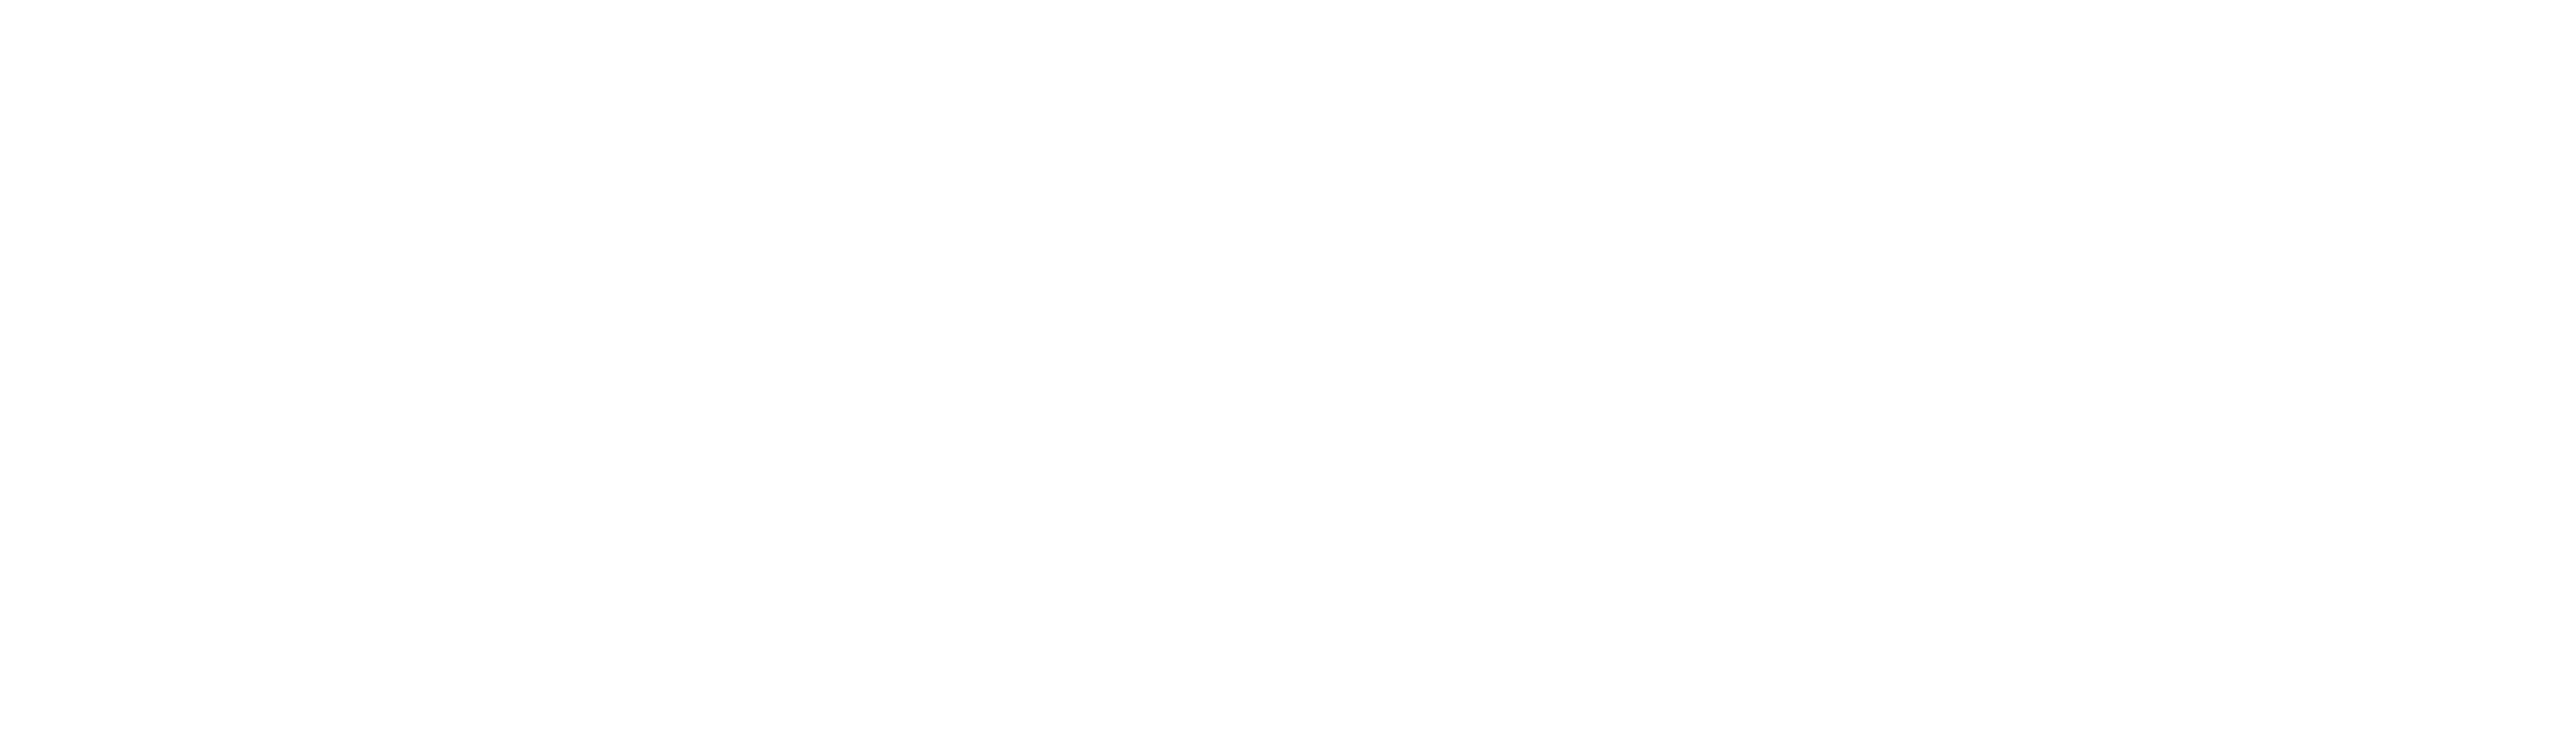 nocd-logo-white